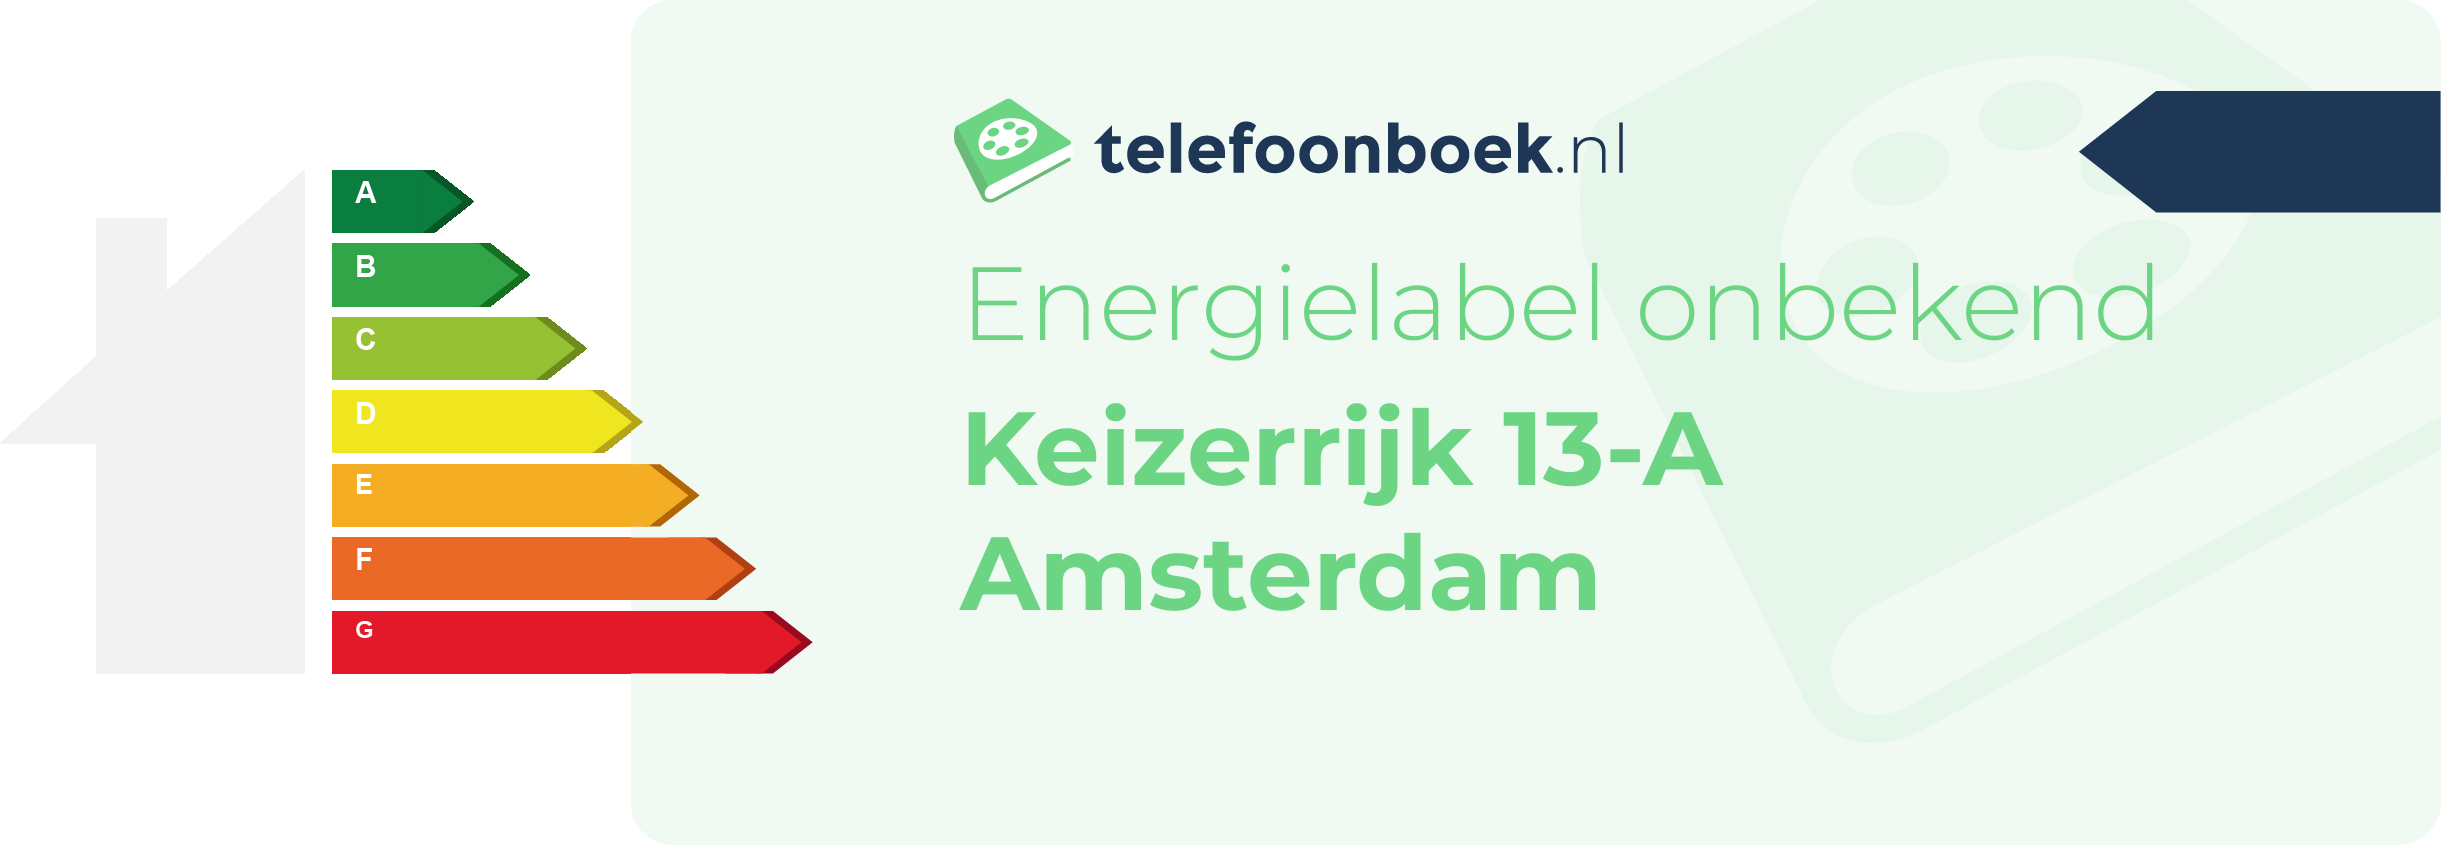 Energielabel Keizerrijk 13-A Amsterdam